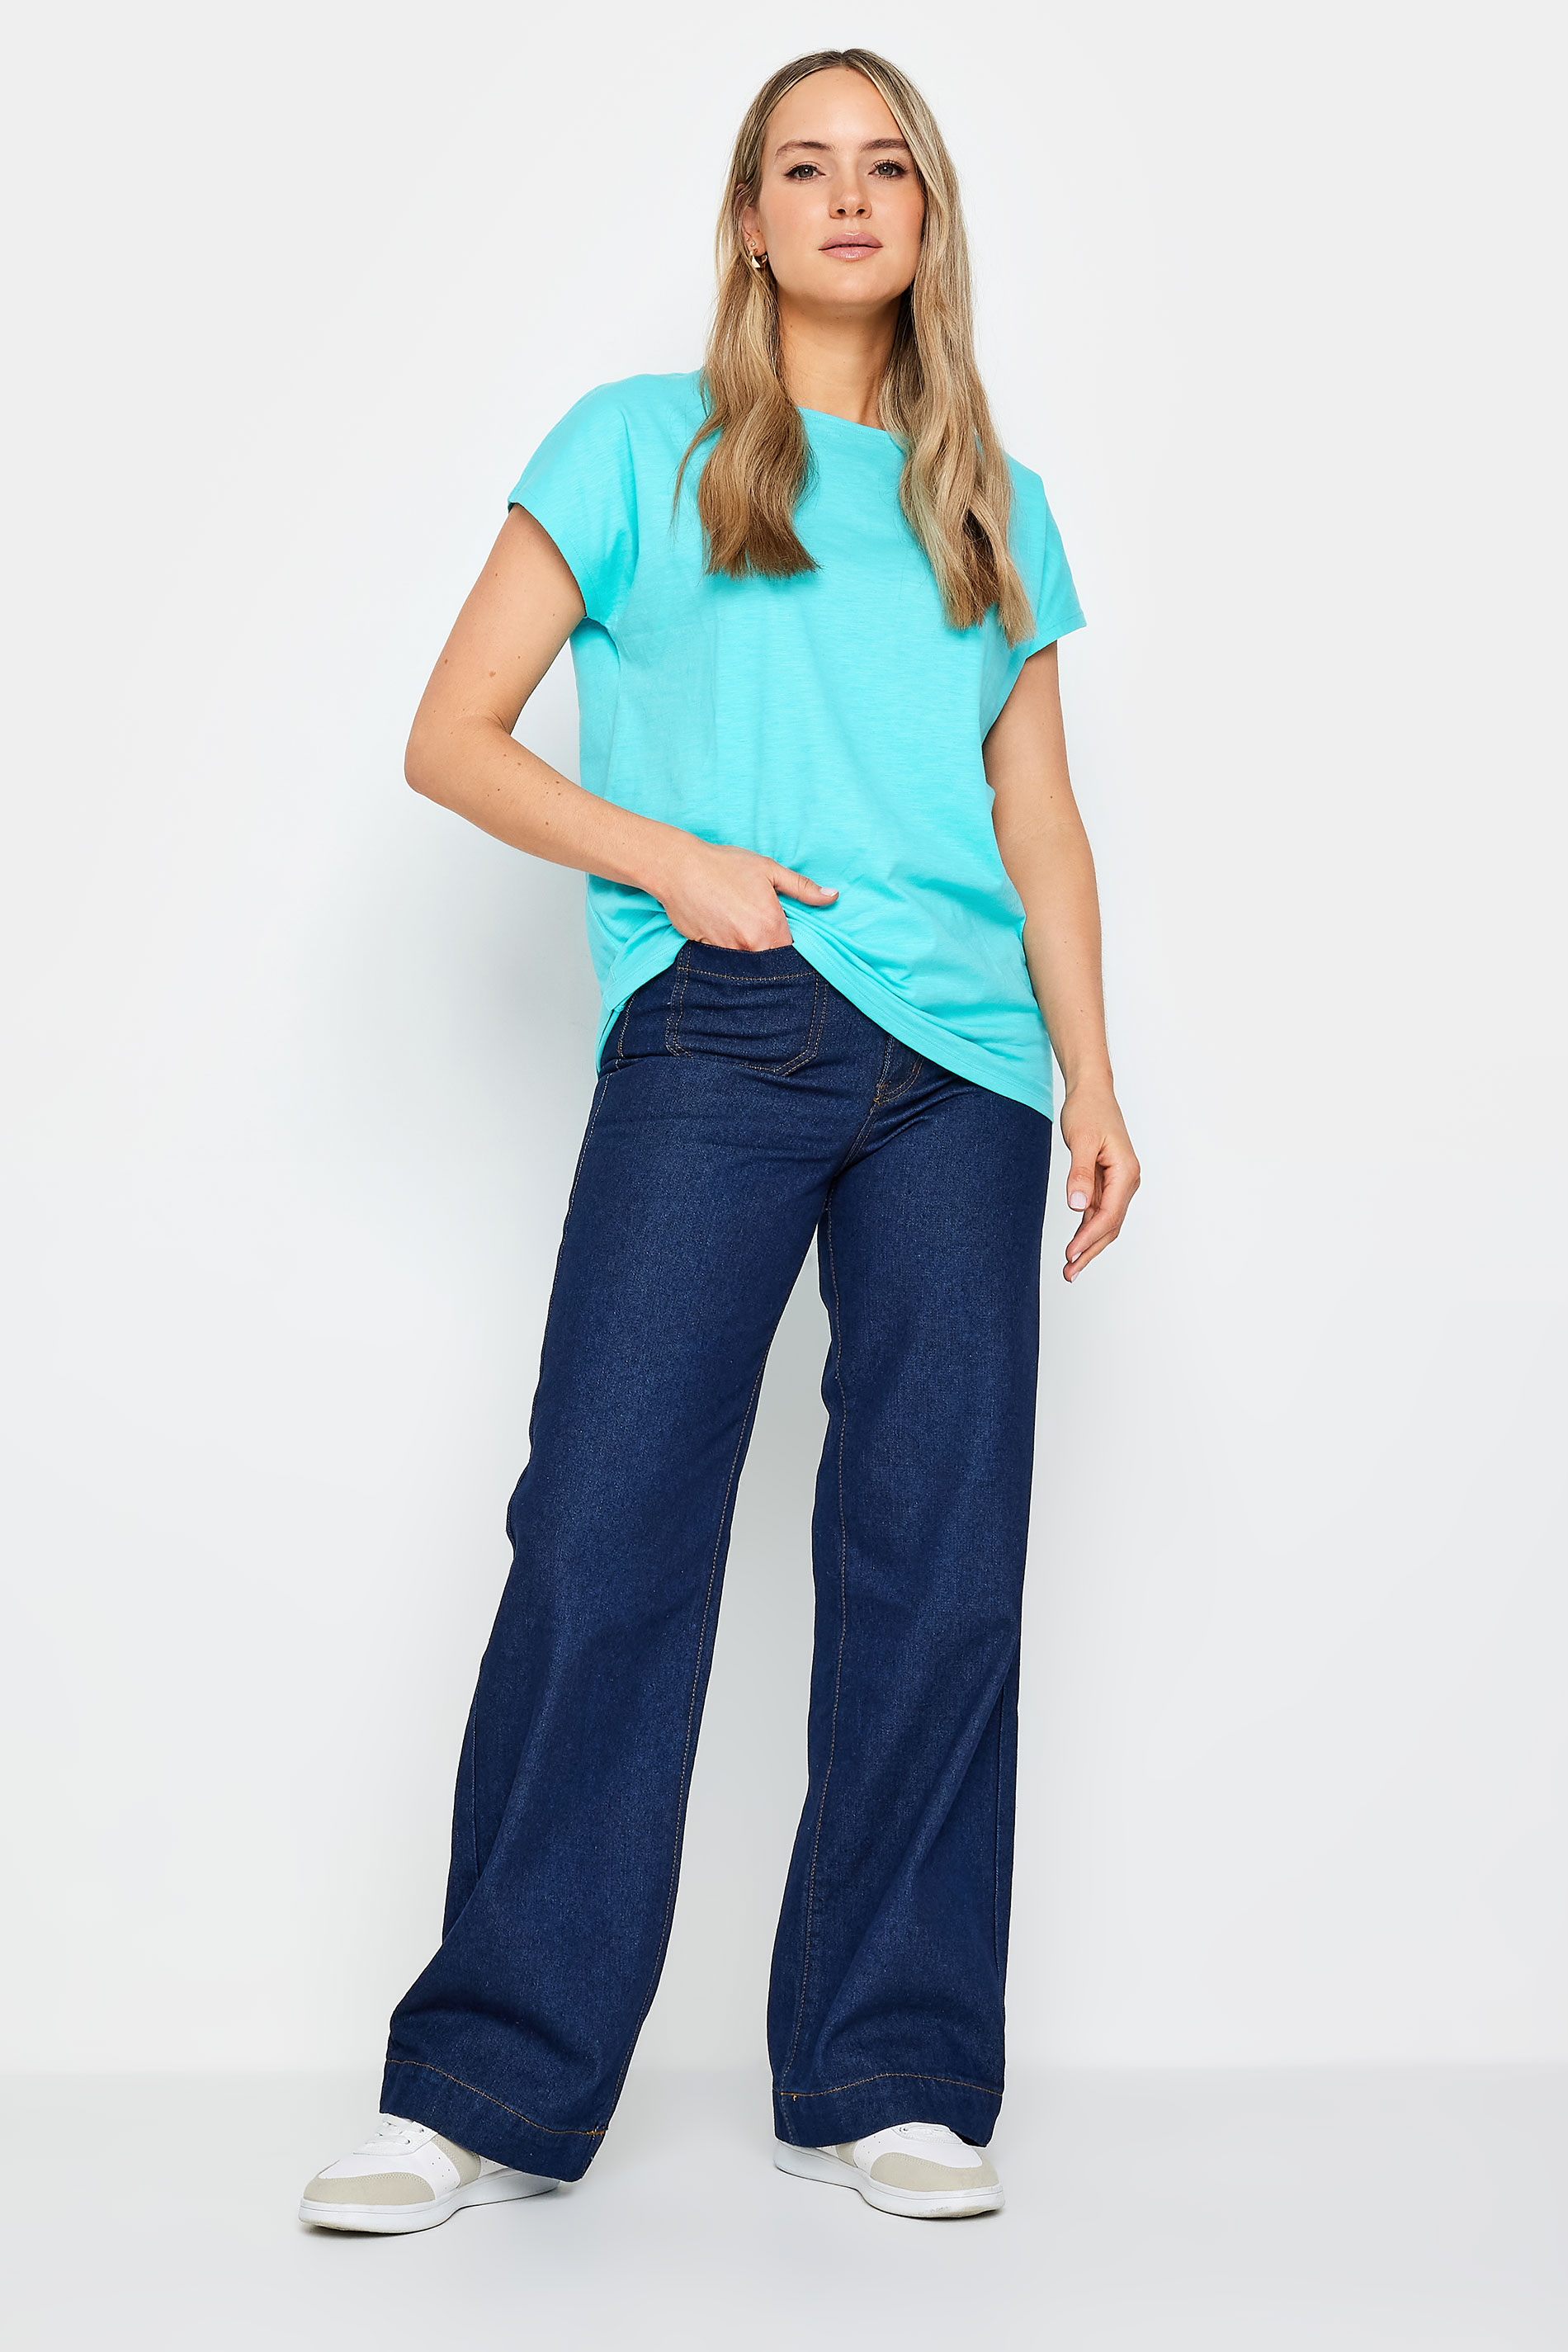 LTS Tall Womens Bright Blue Short Sleeve T-Shirt | Long Tall Sally 2